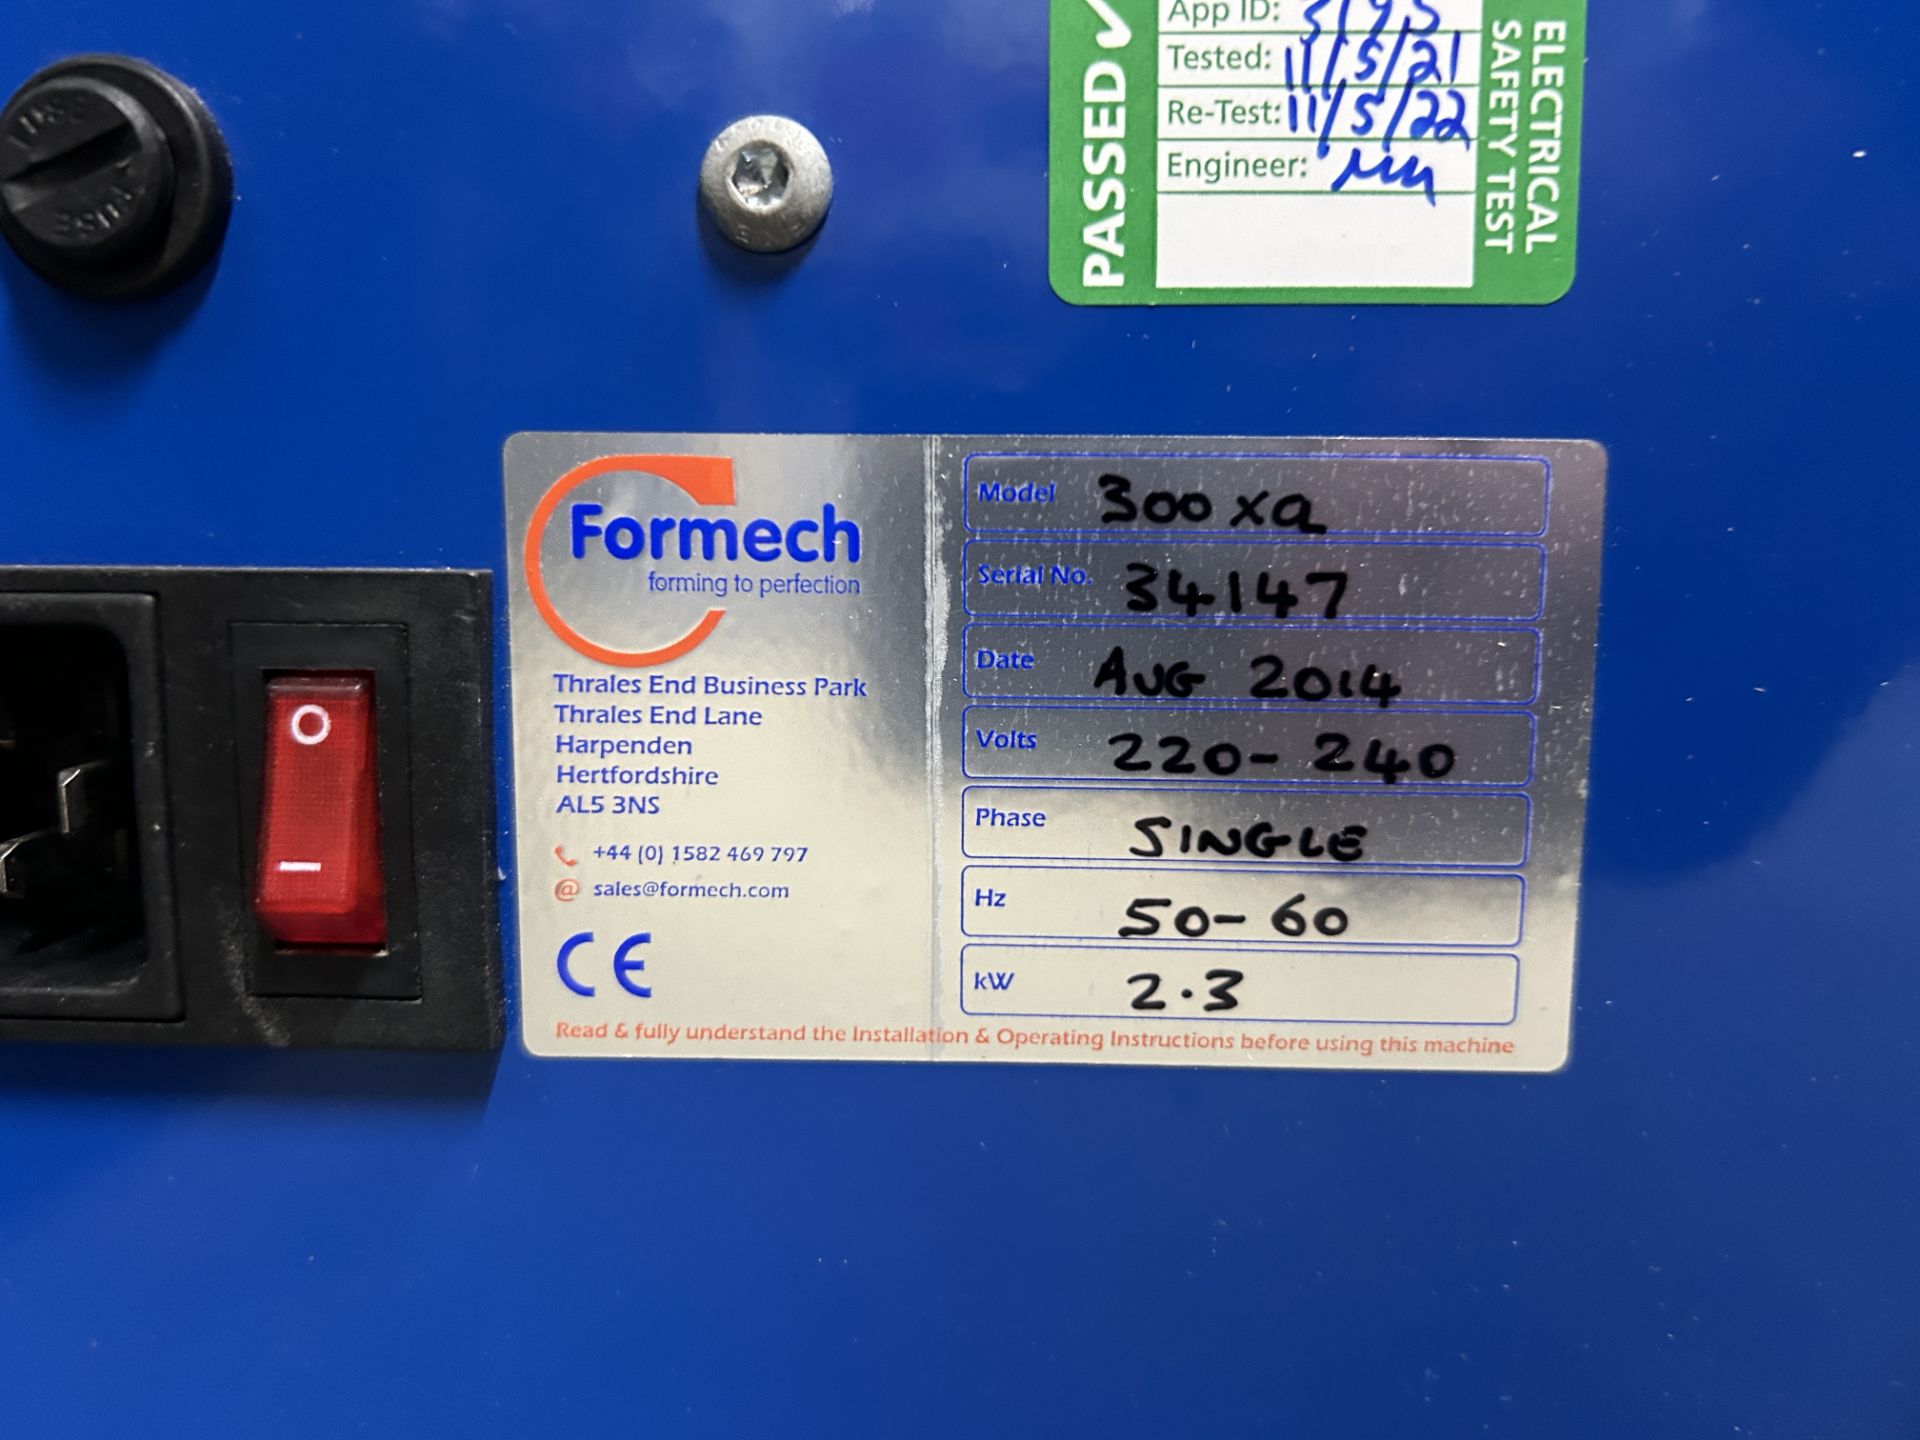 Formech 300 XG vacuum former - Image 5 of 5